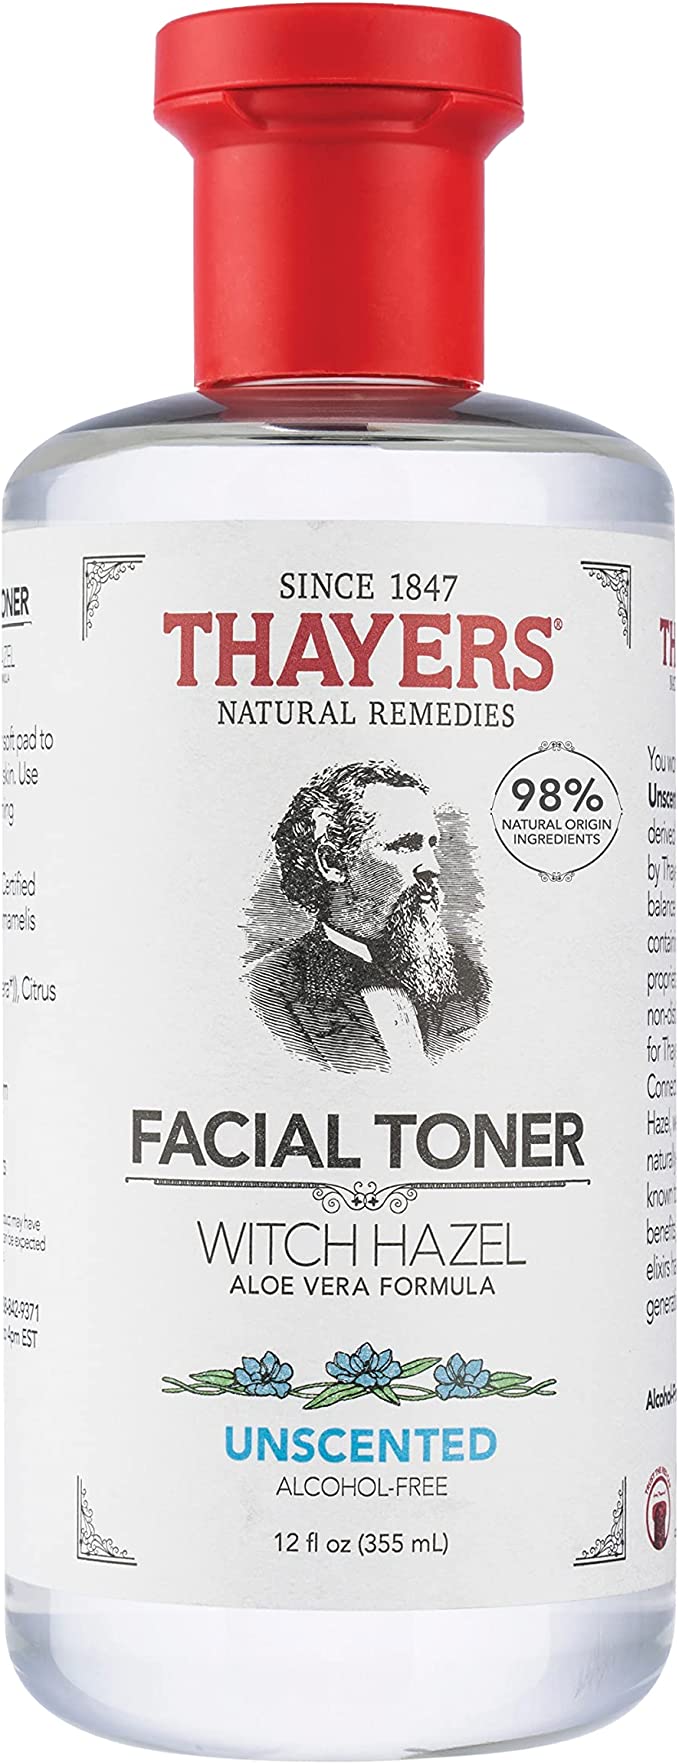 Thayers Witch Hazel Facial Toner Aloe Vera Formula - Unscented (355ml)